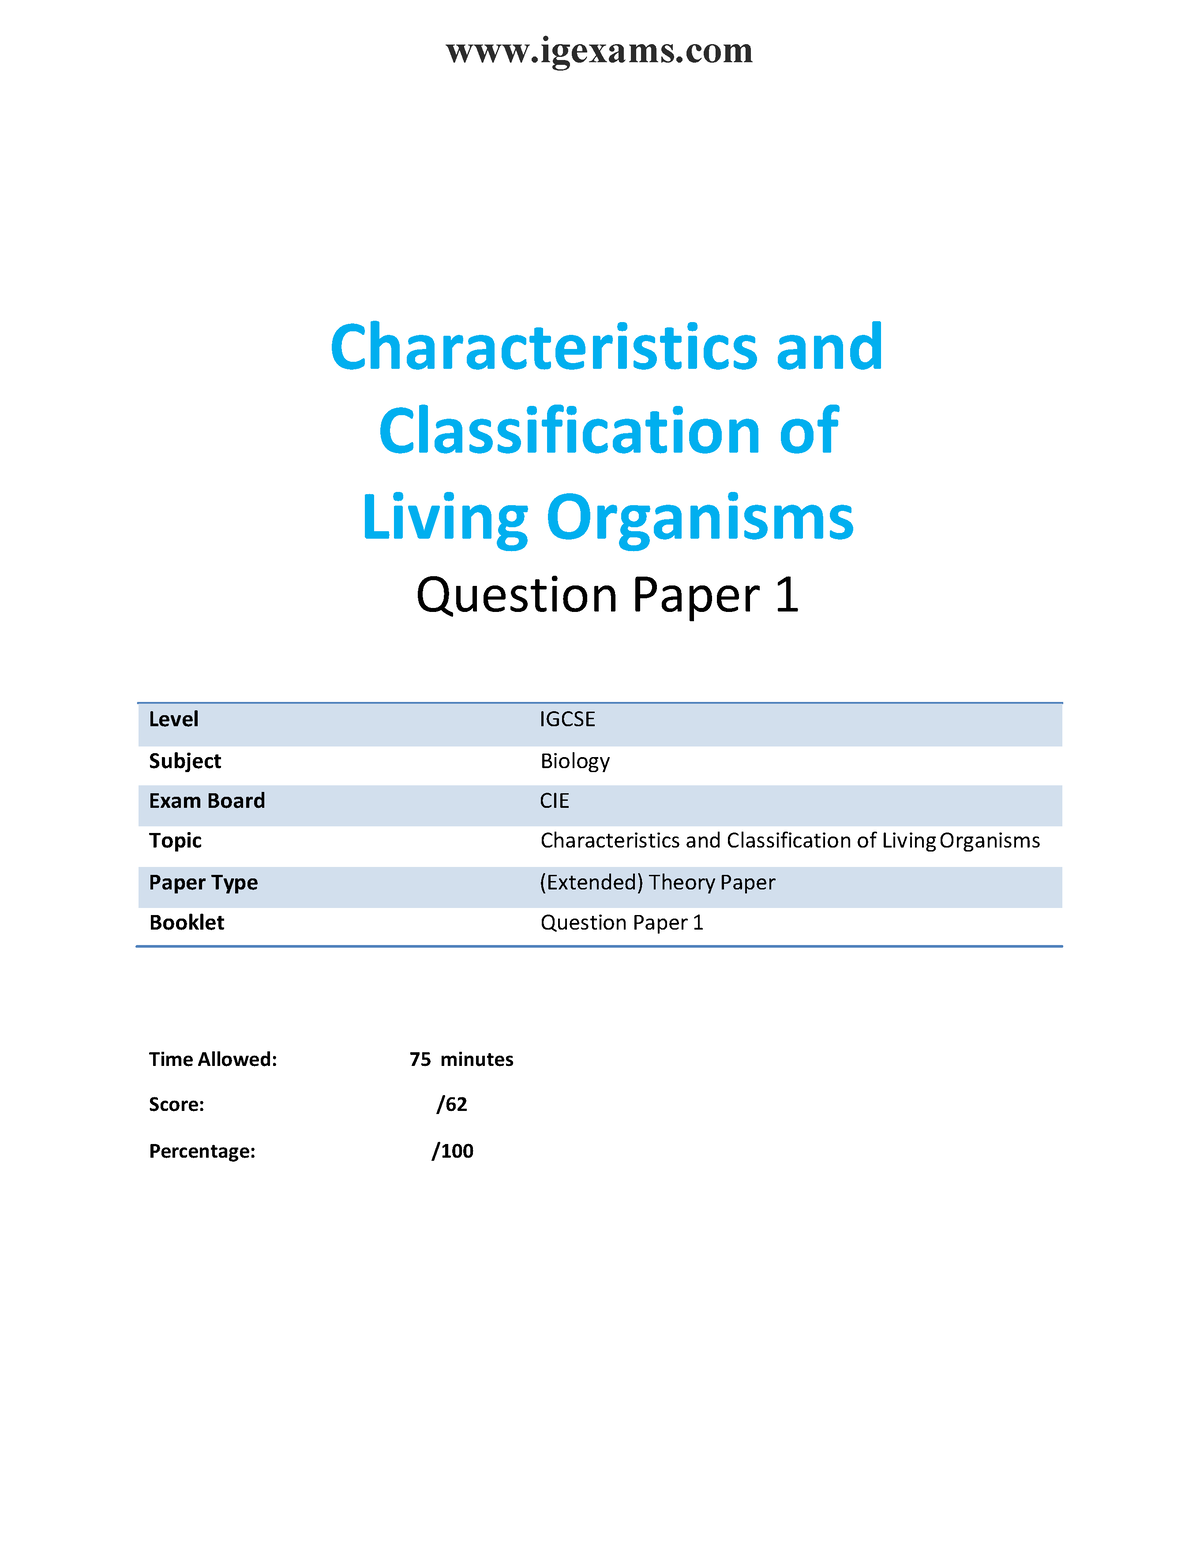 characteristics_and_classification_of_living_organisms-_igcse- cie-biology_-e   - Studocu